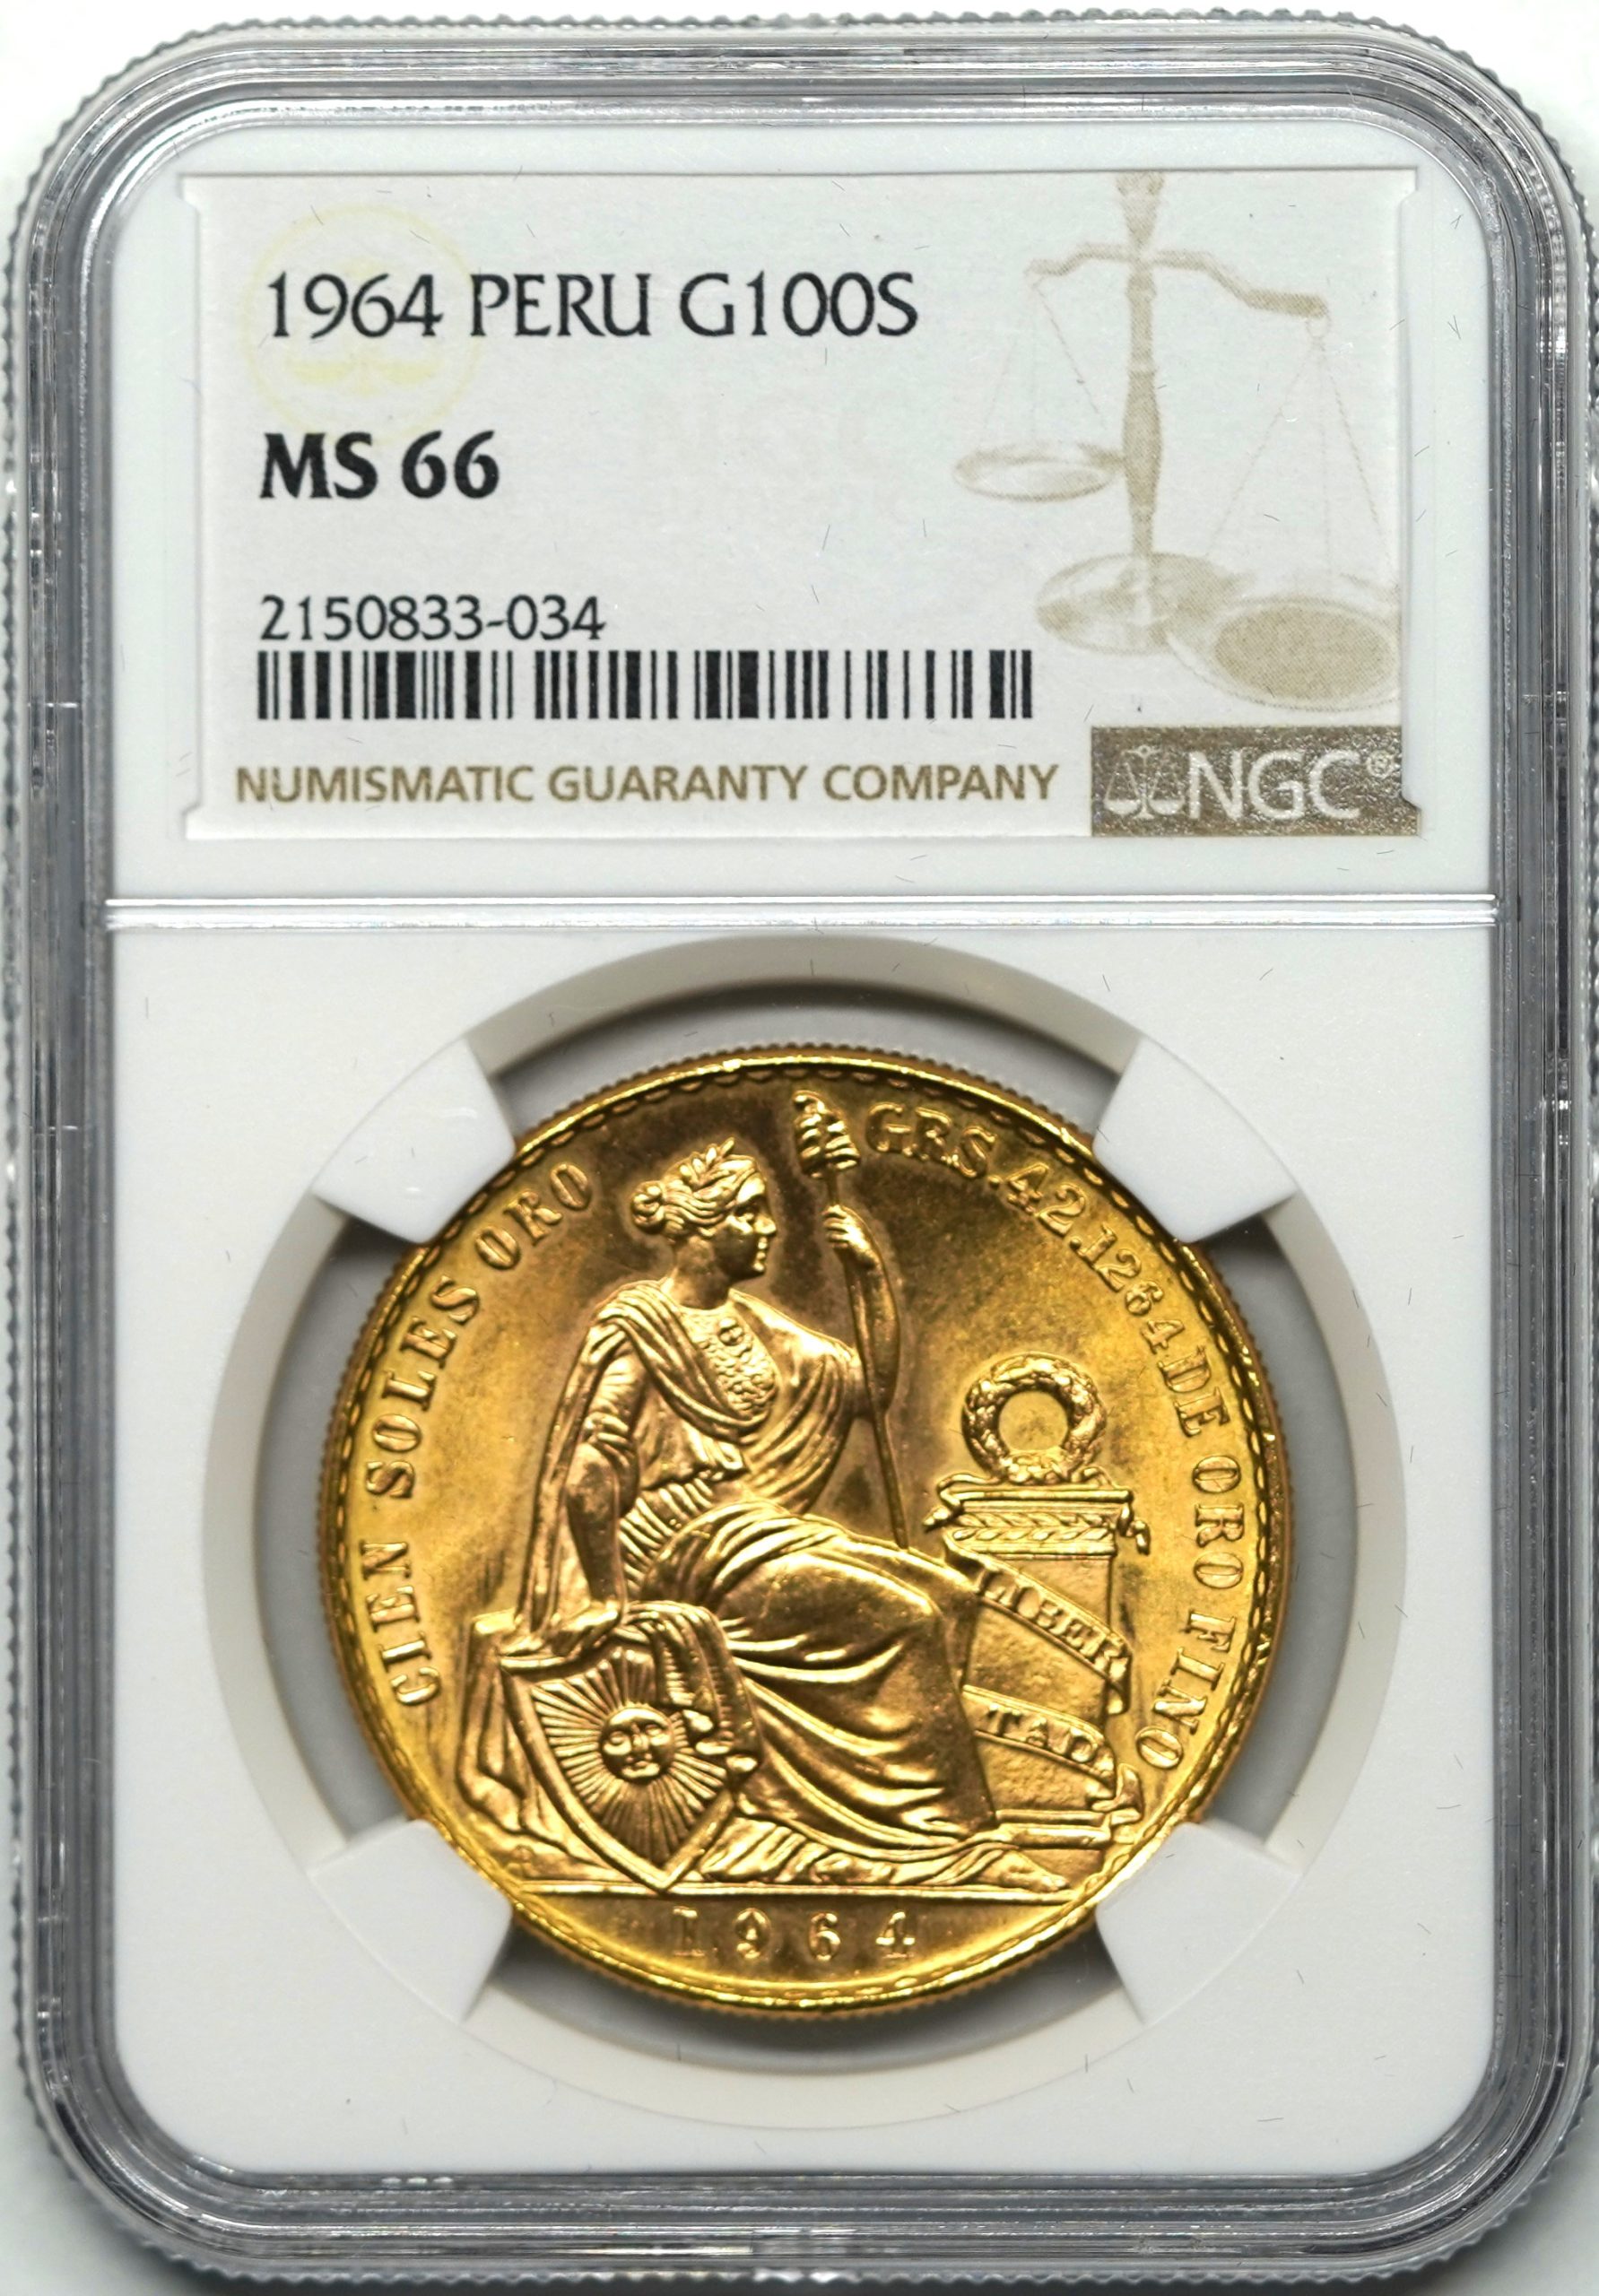 Sold】ペルー 1964年 100ソル金貨 MS66 NGC | ソブリンパートナーズ